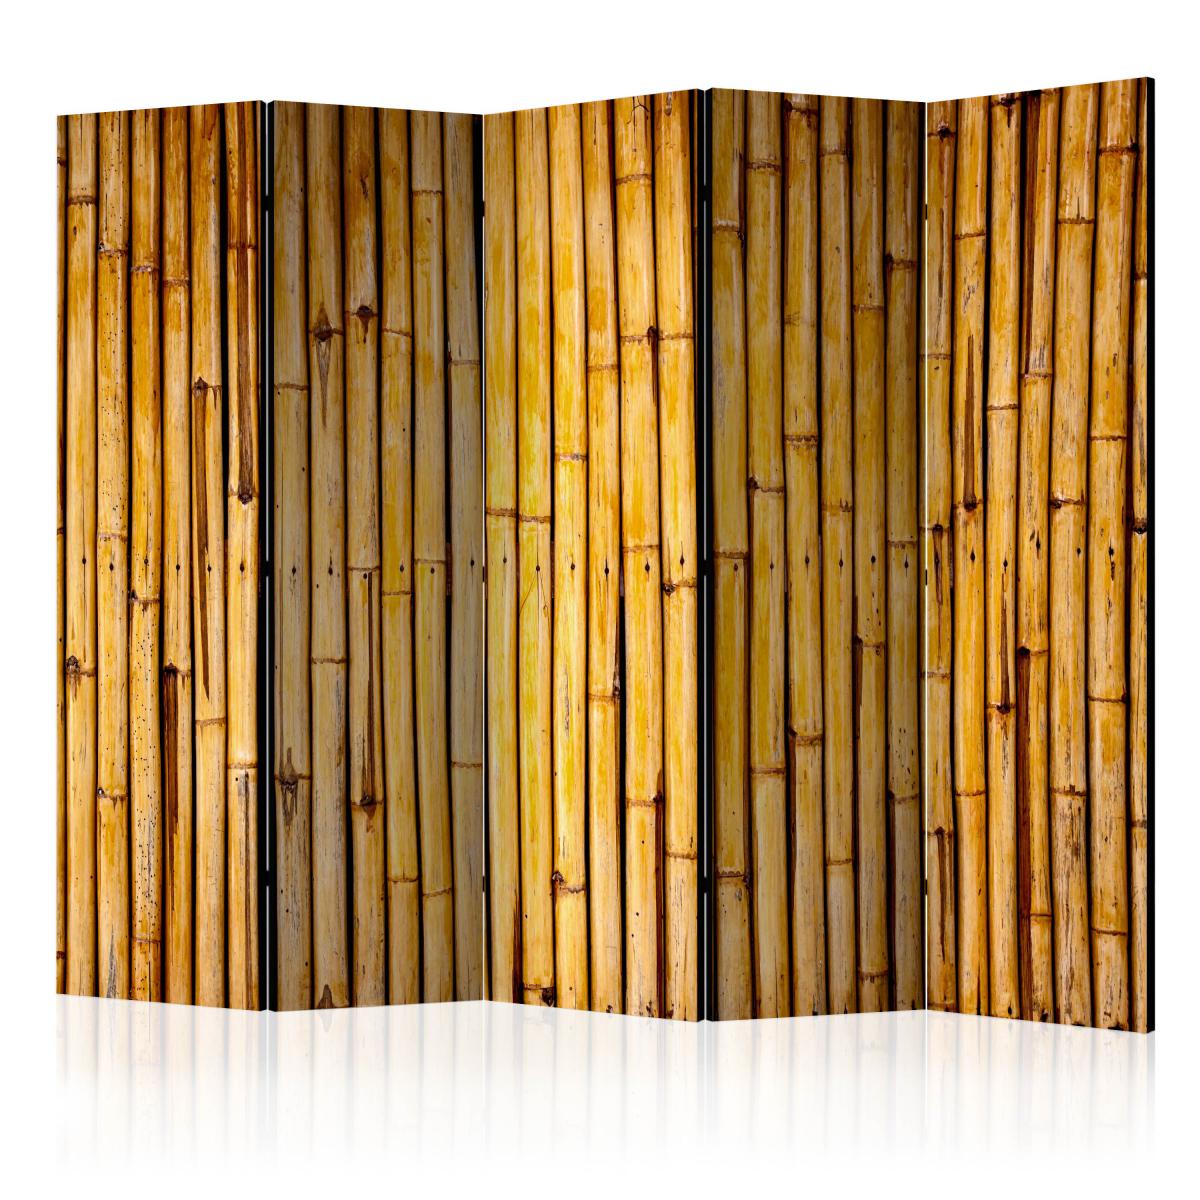 Bimago - Paravent 5 volets - Bamboo Garden II [Room Dividers] - Décoration, image, art | 225x172 cm | XL - Grand Format | - Cloisons